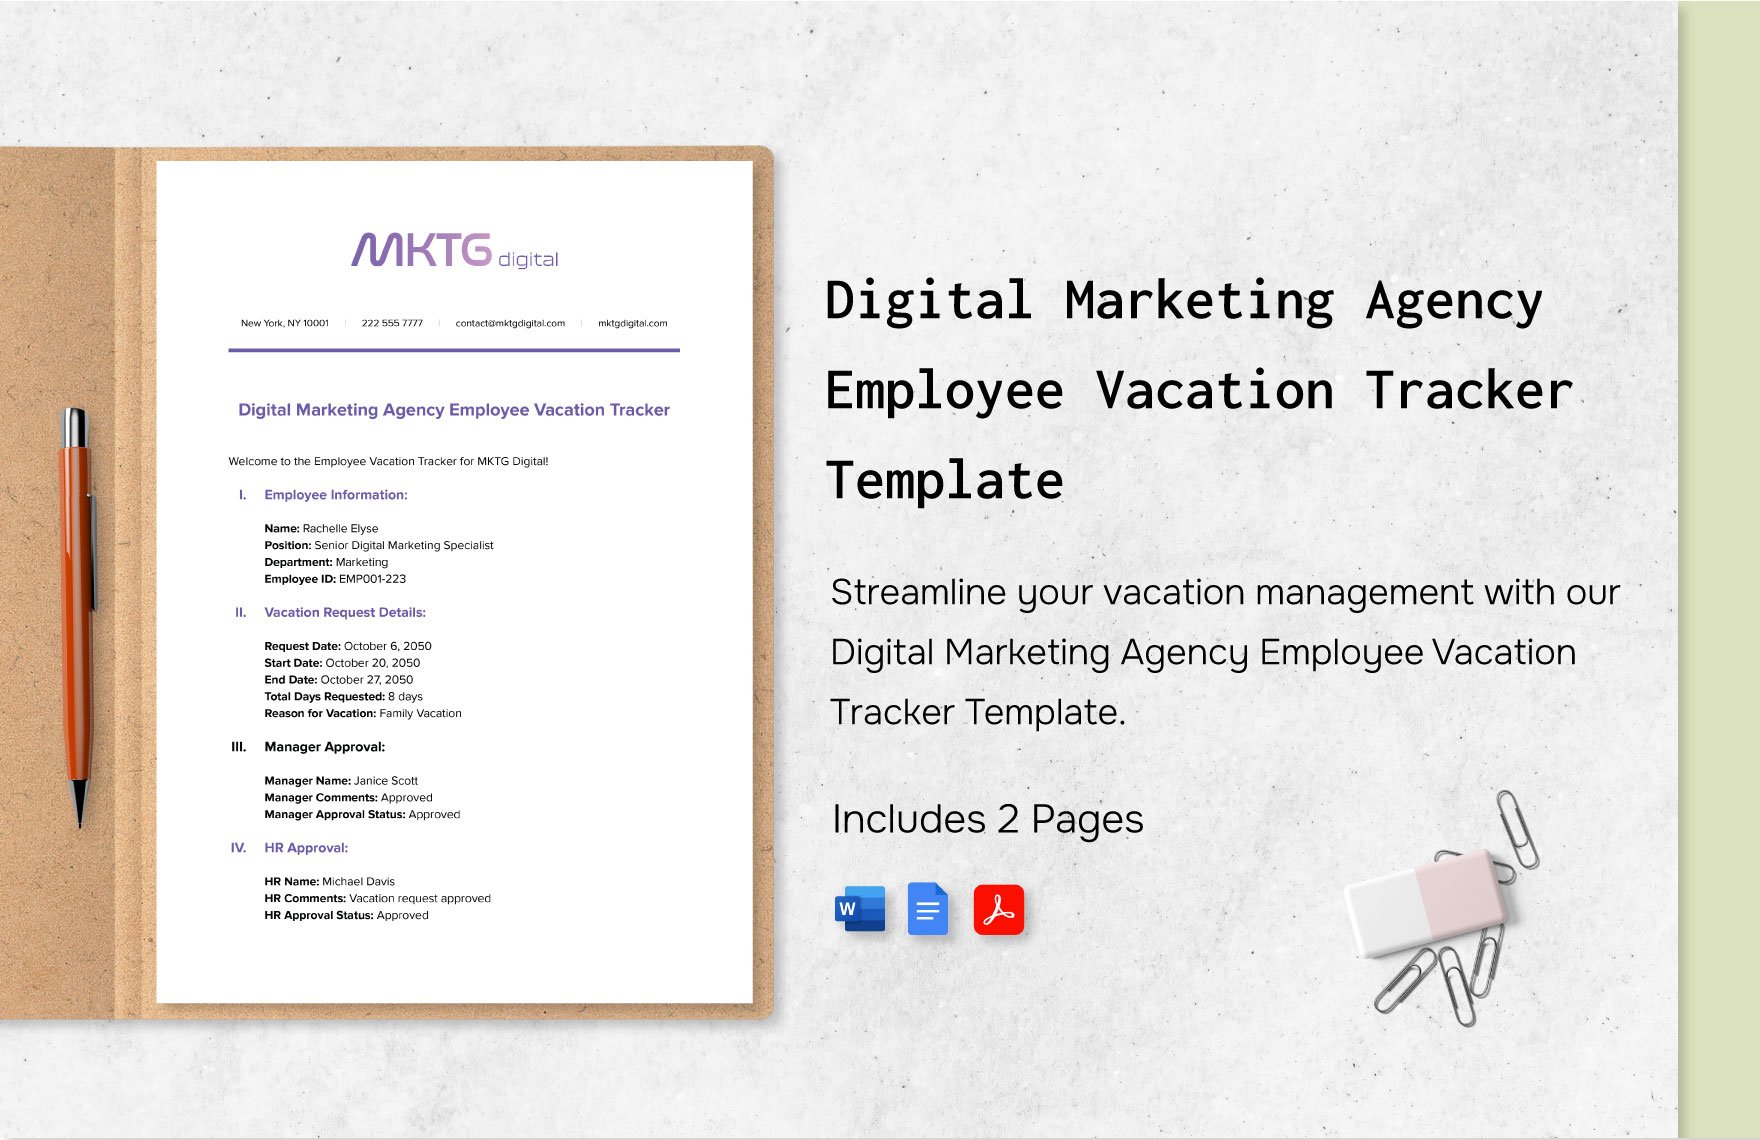 Digital Marketing Agency Employee Vacation Tracker Template